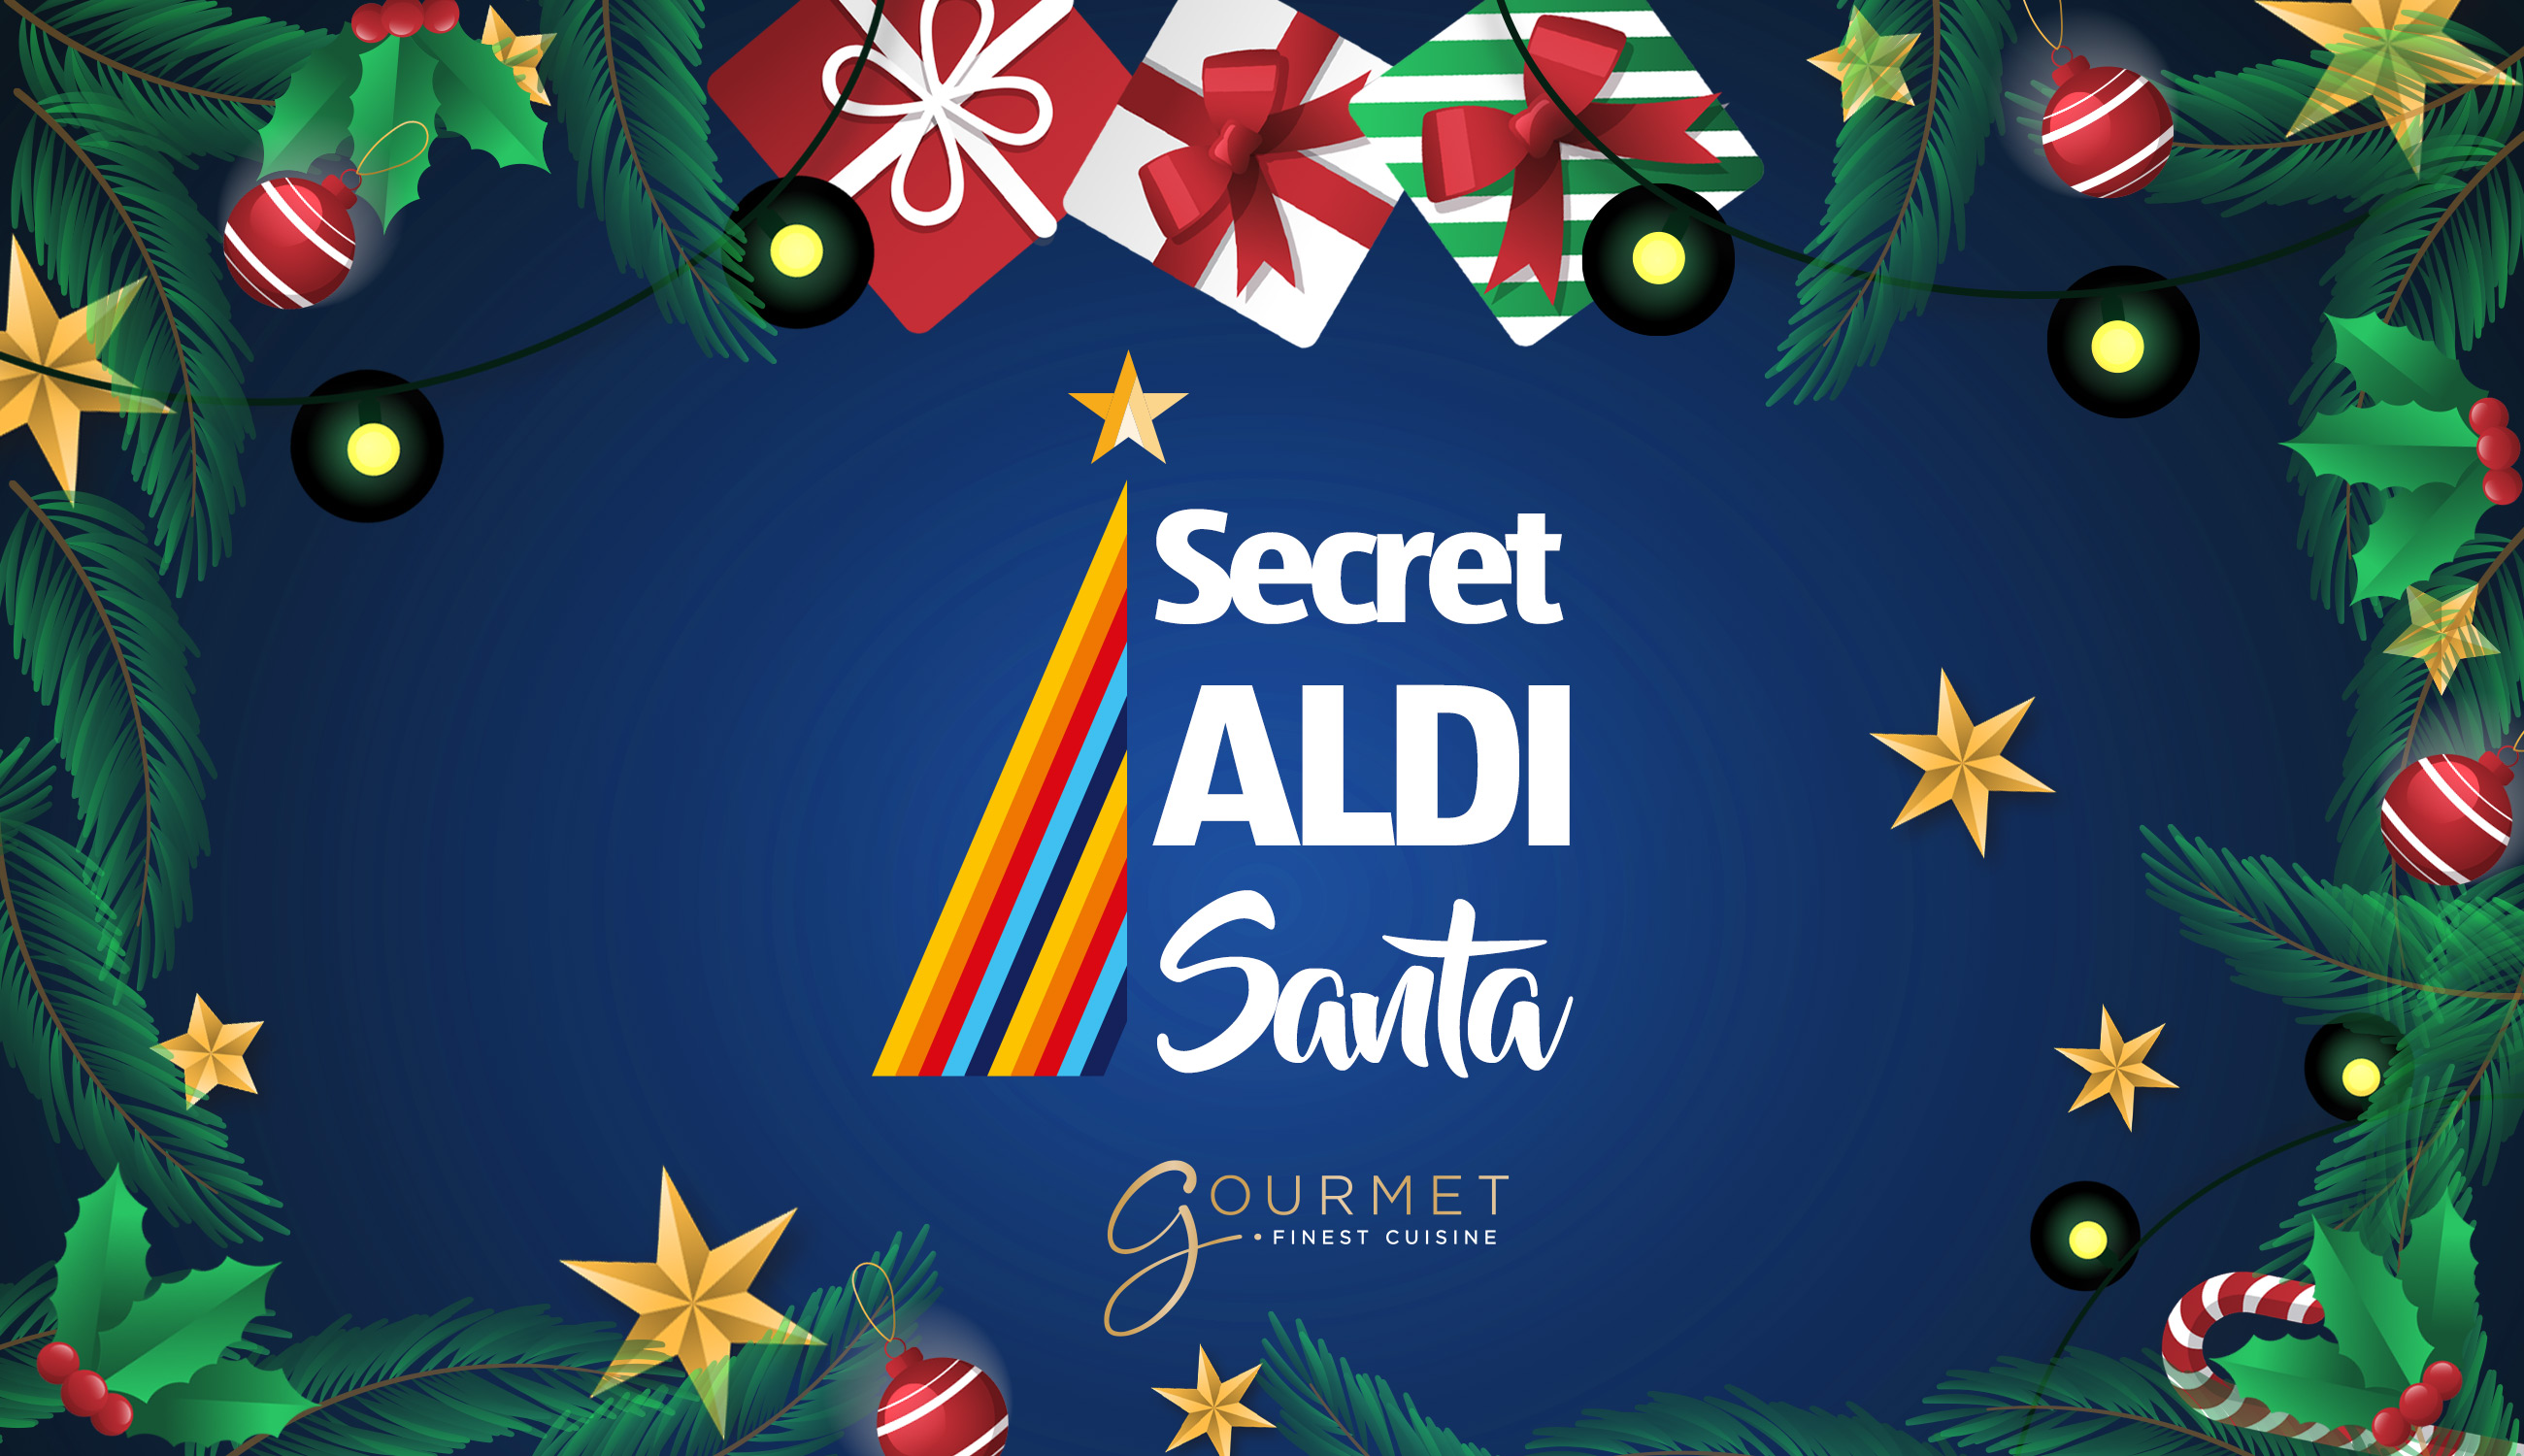 Secret ALDI Santa